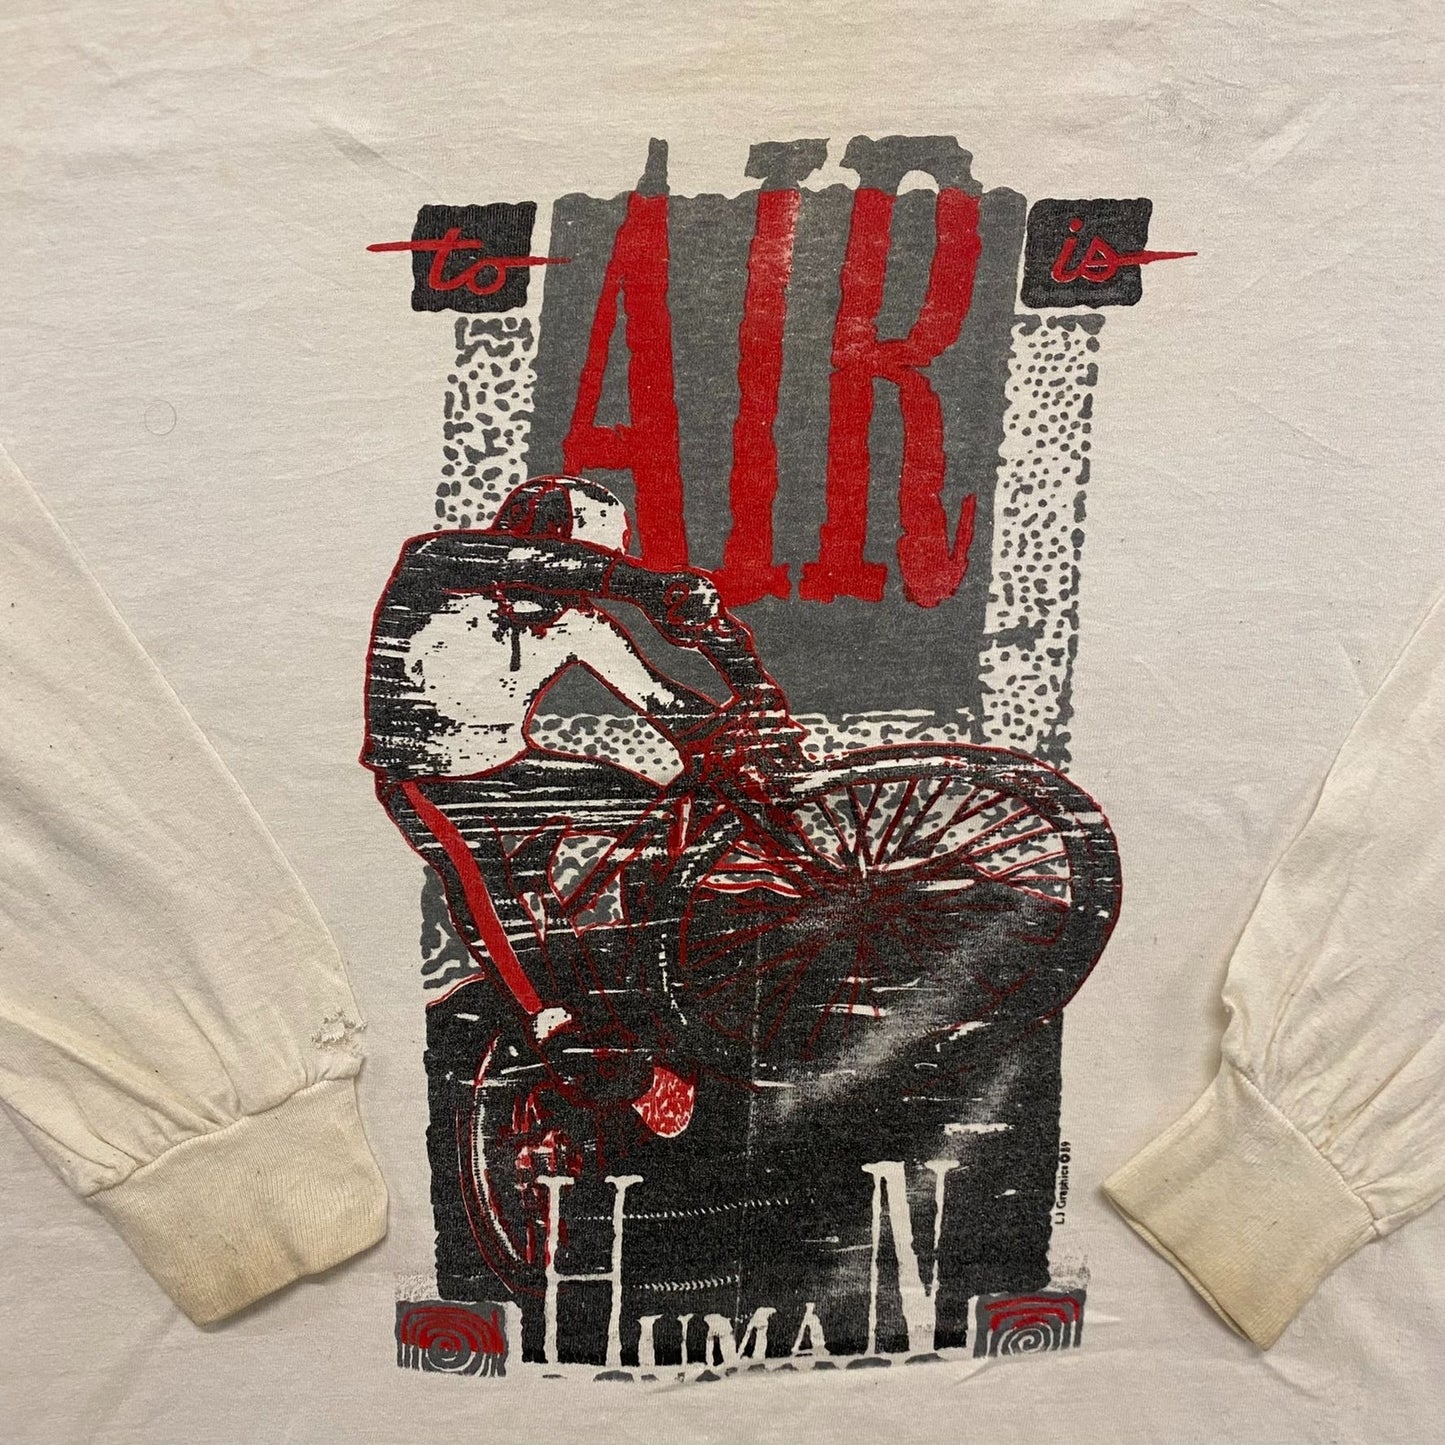 Air Human BMX Wheelie Vintage 90s Thrashed T-Shirt